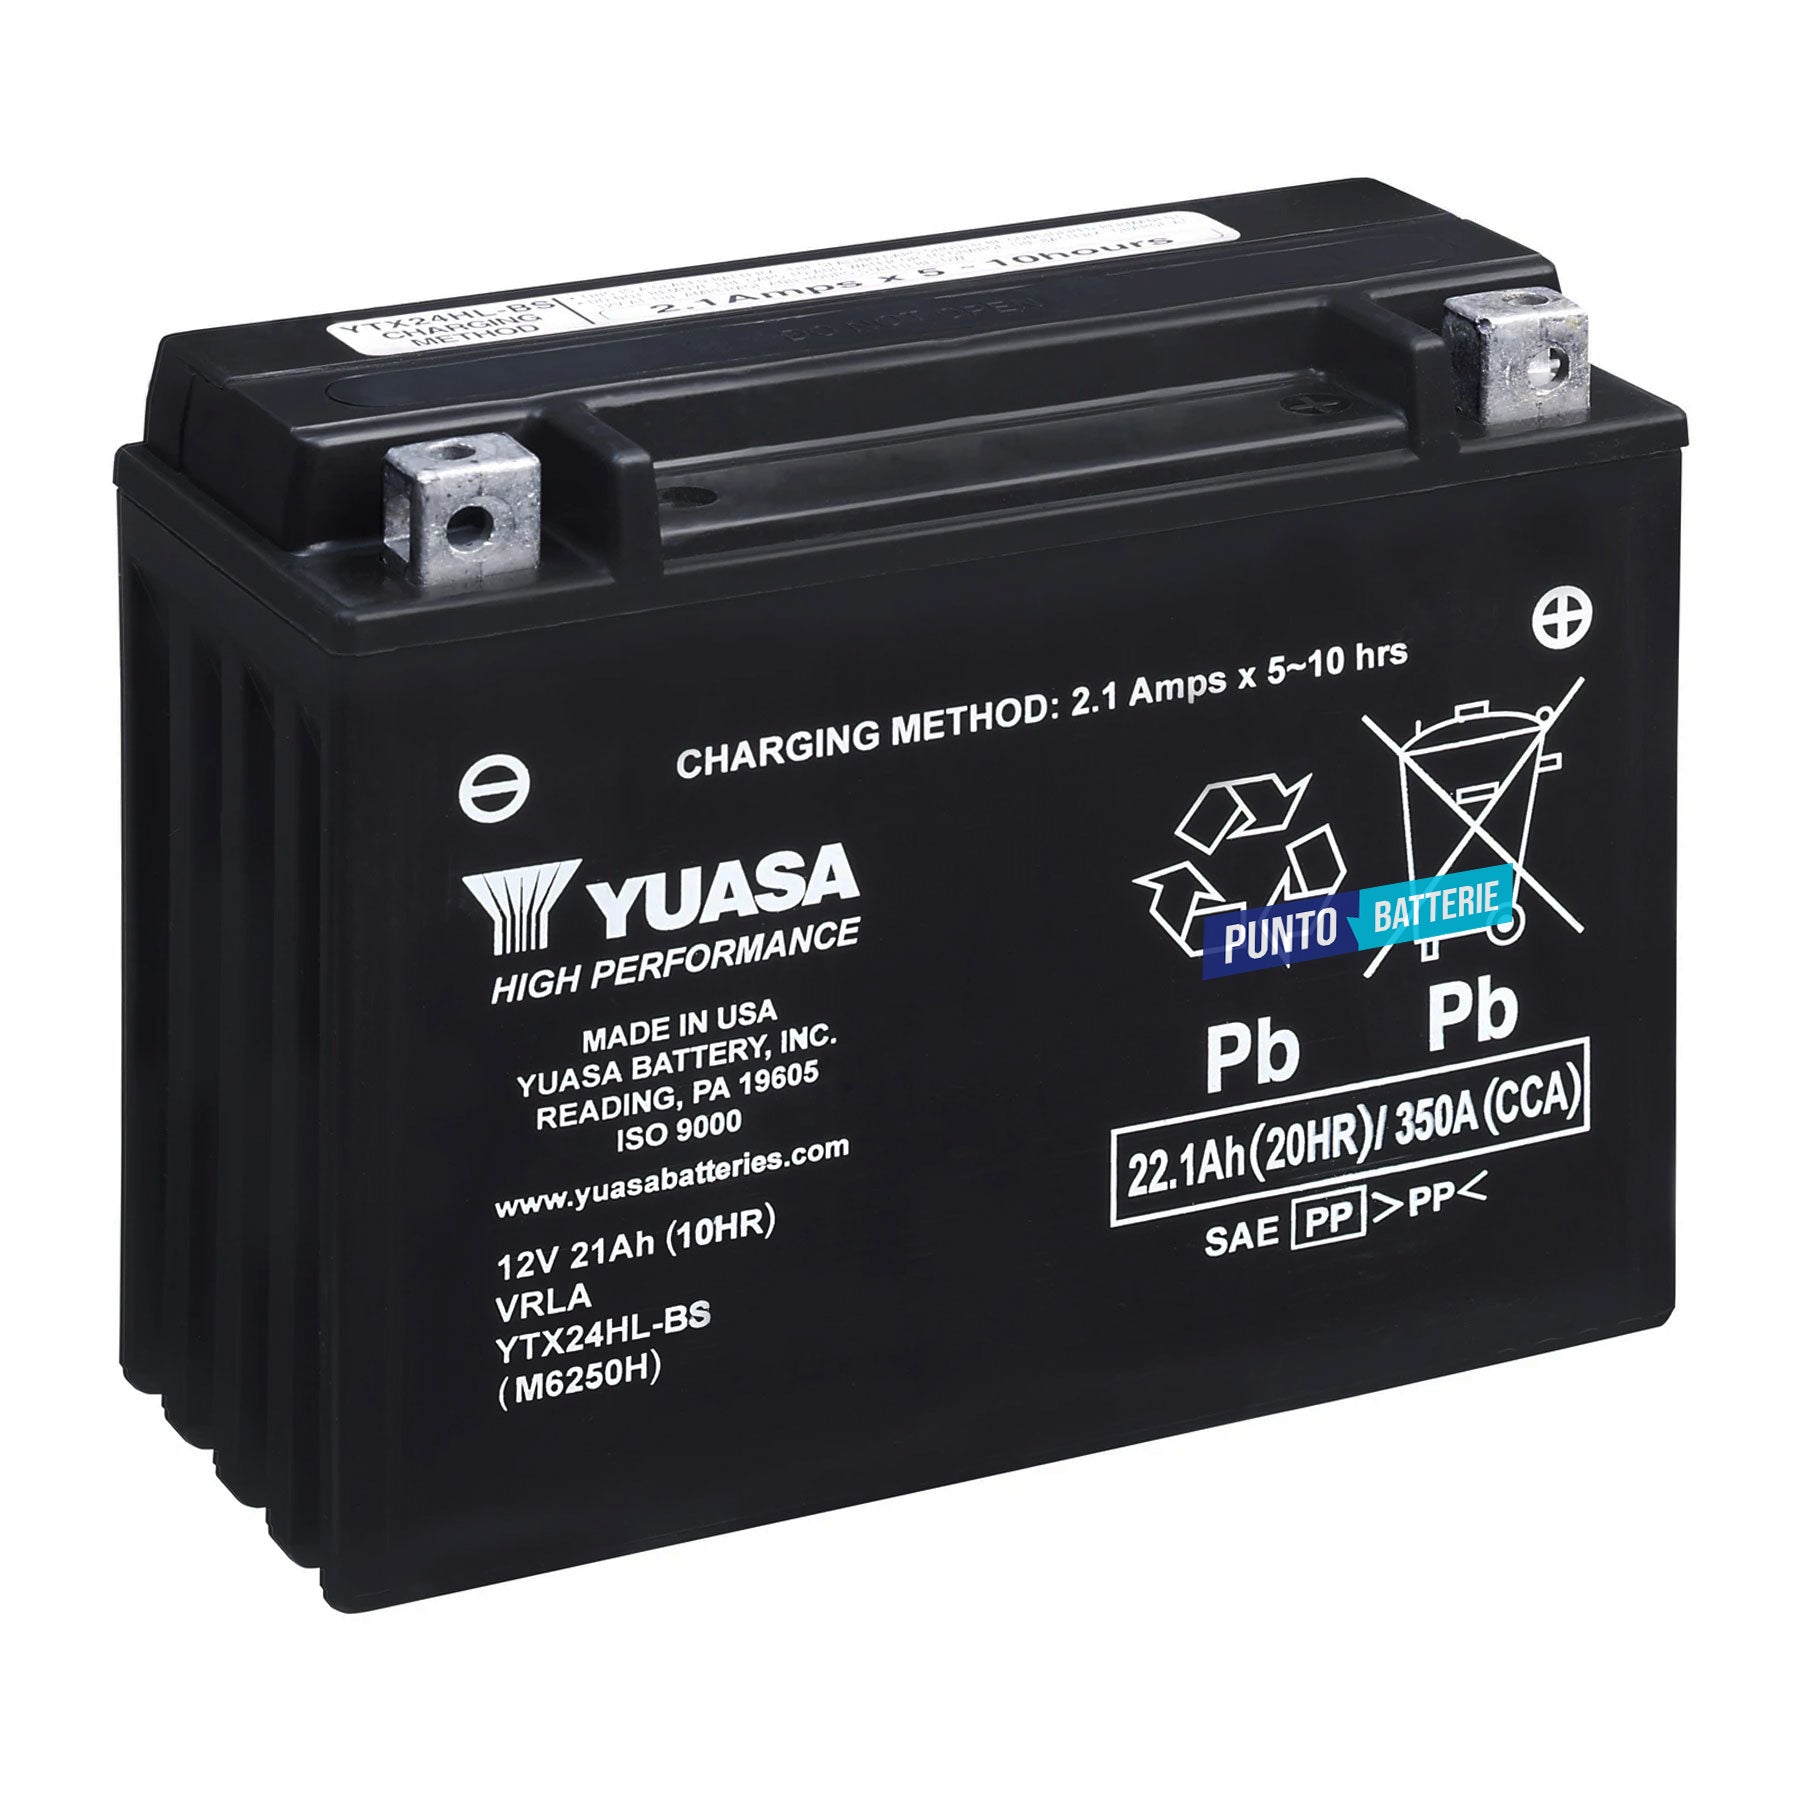 Batteria originale Yuasa YTX High Performance YTX24HL-BS, dimensioni 205 x 87 x 162, polo positivo a destra, 12 volt, 21 amperora, 350 ampere. Batteria per moto, scooter e powersport.